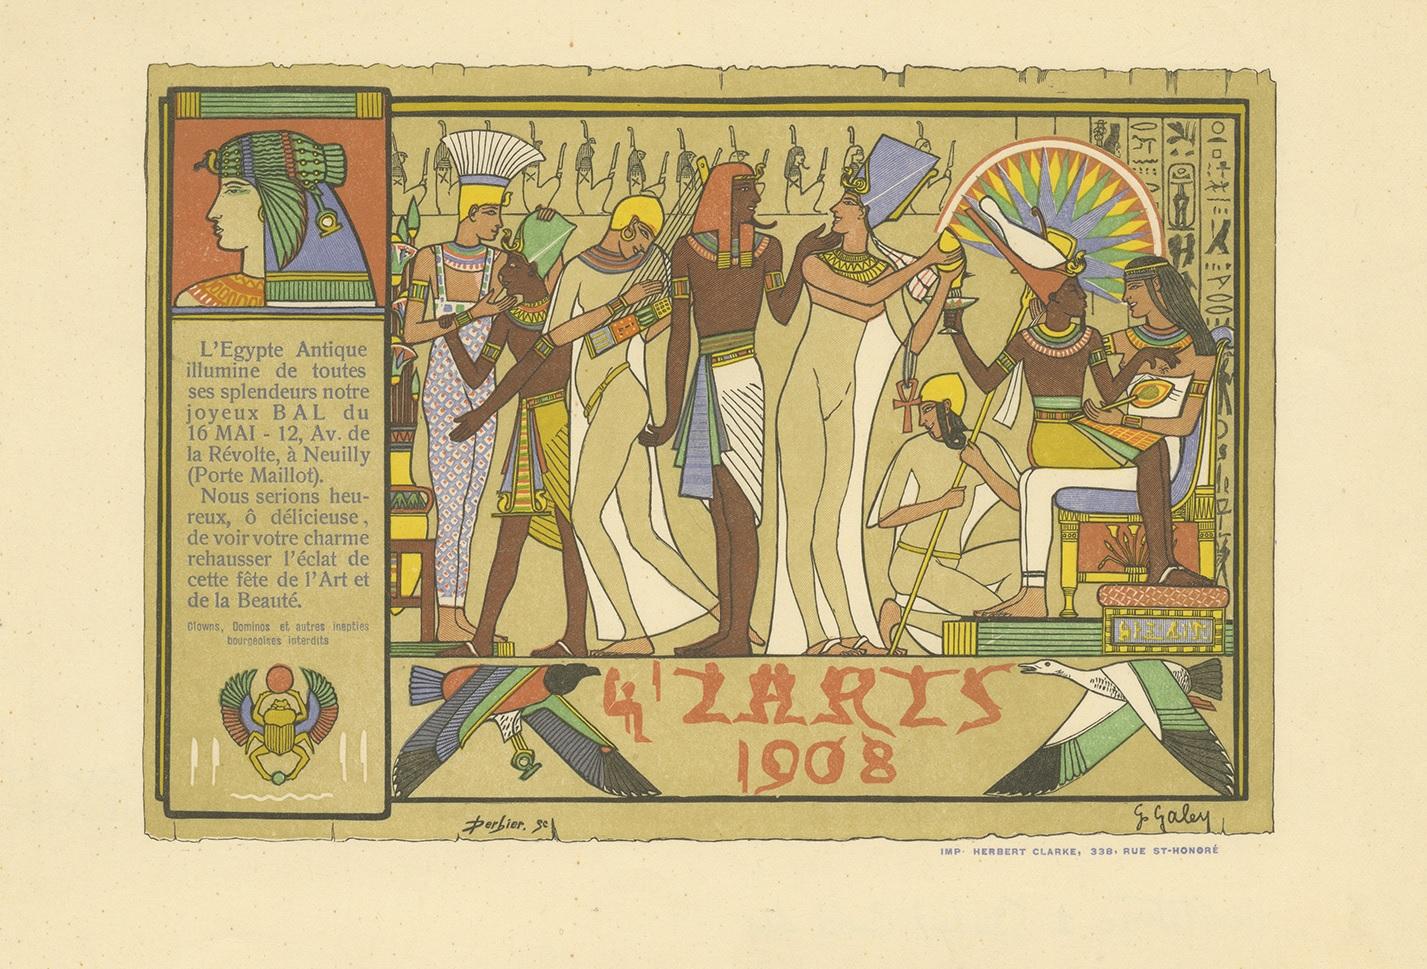 Antique print titled 'L'Egypte Antique illumine de toutes ses splendeurs notre joyeux Bal (..)'. Invitation card for an Egyptian themed party. Published by Herbert Clarke, 1908.